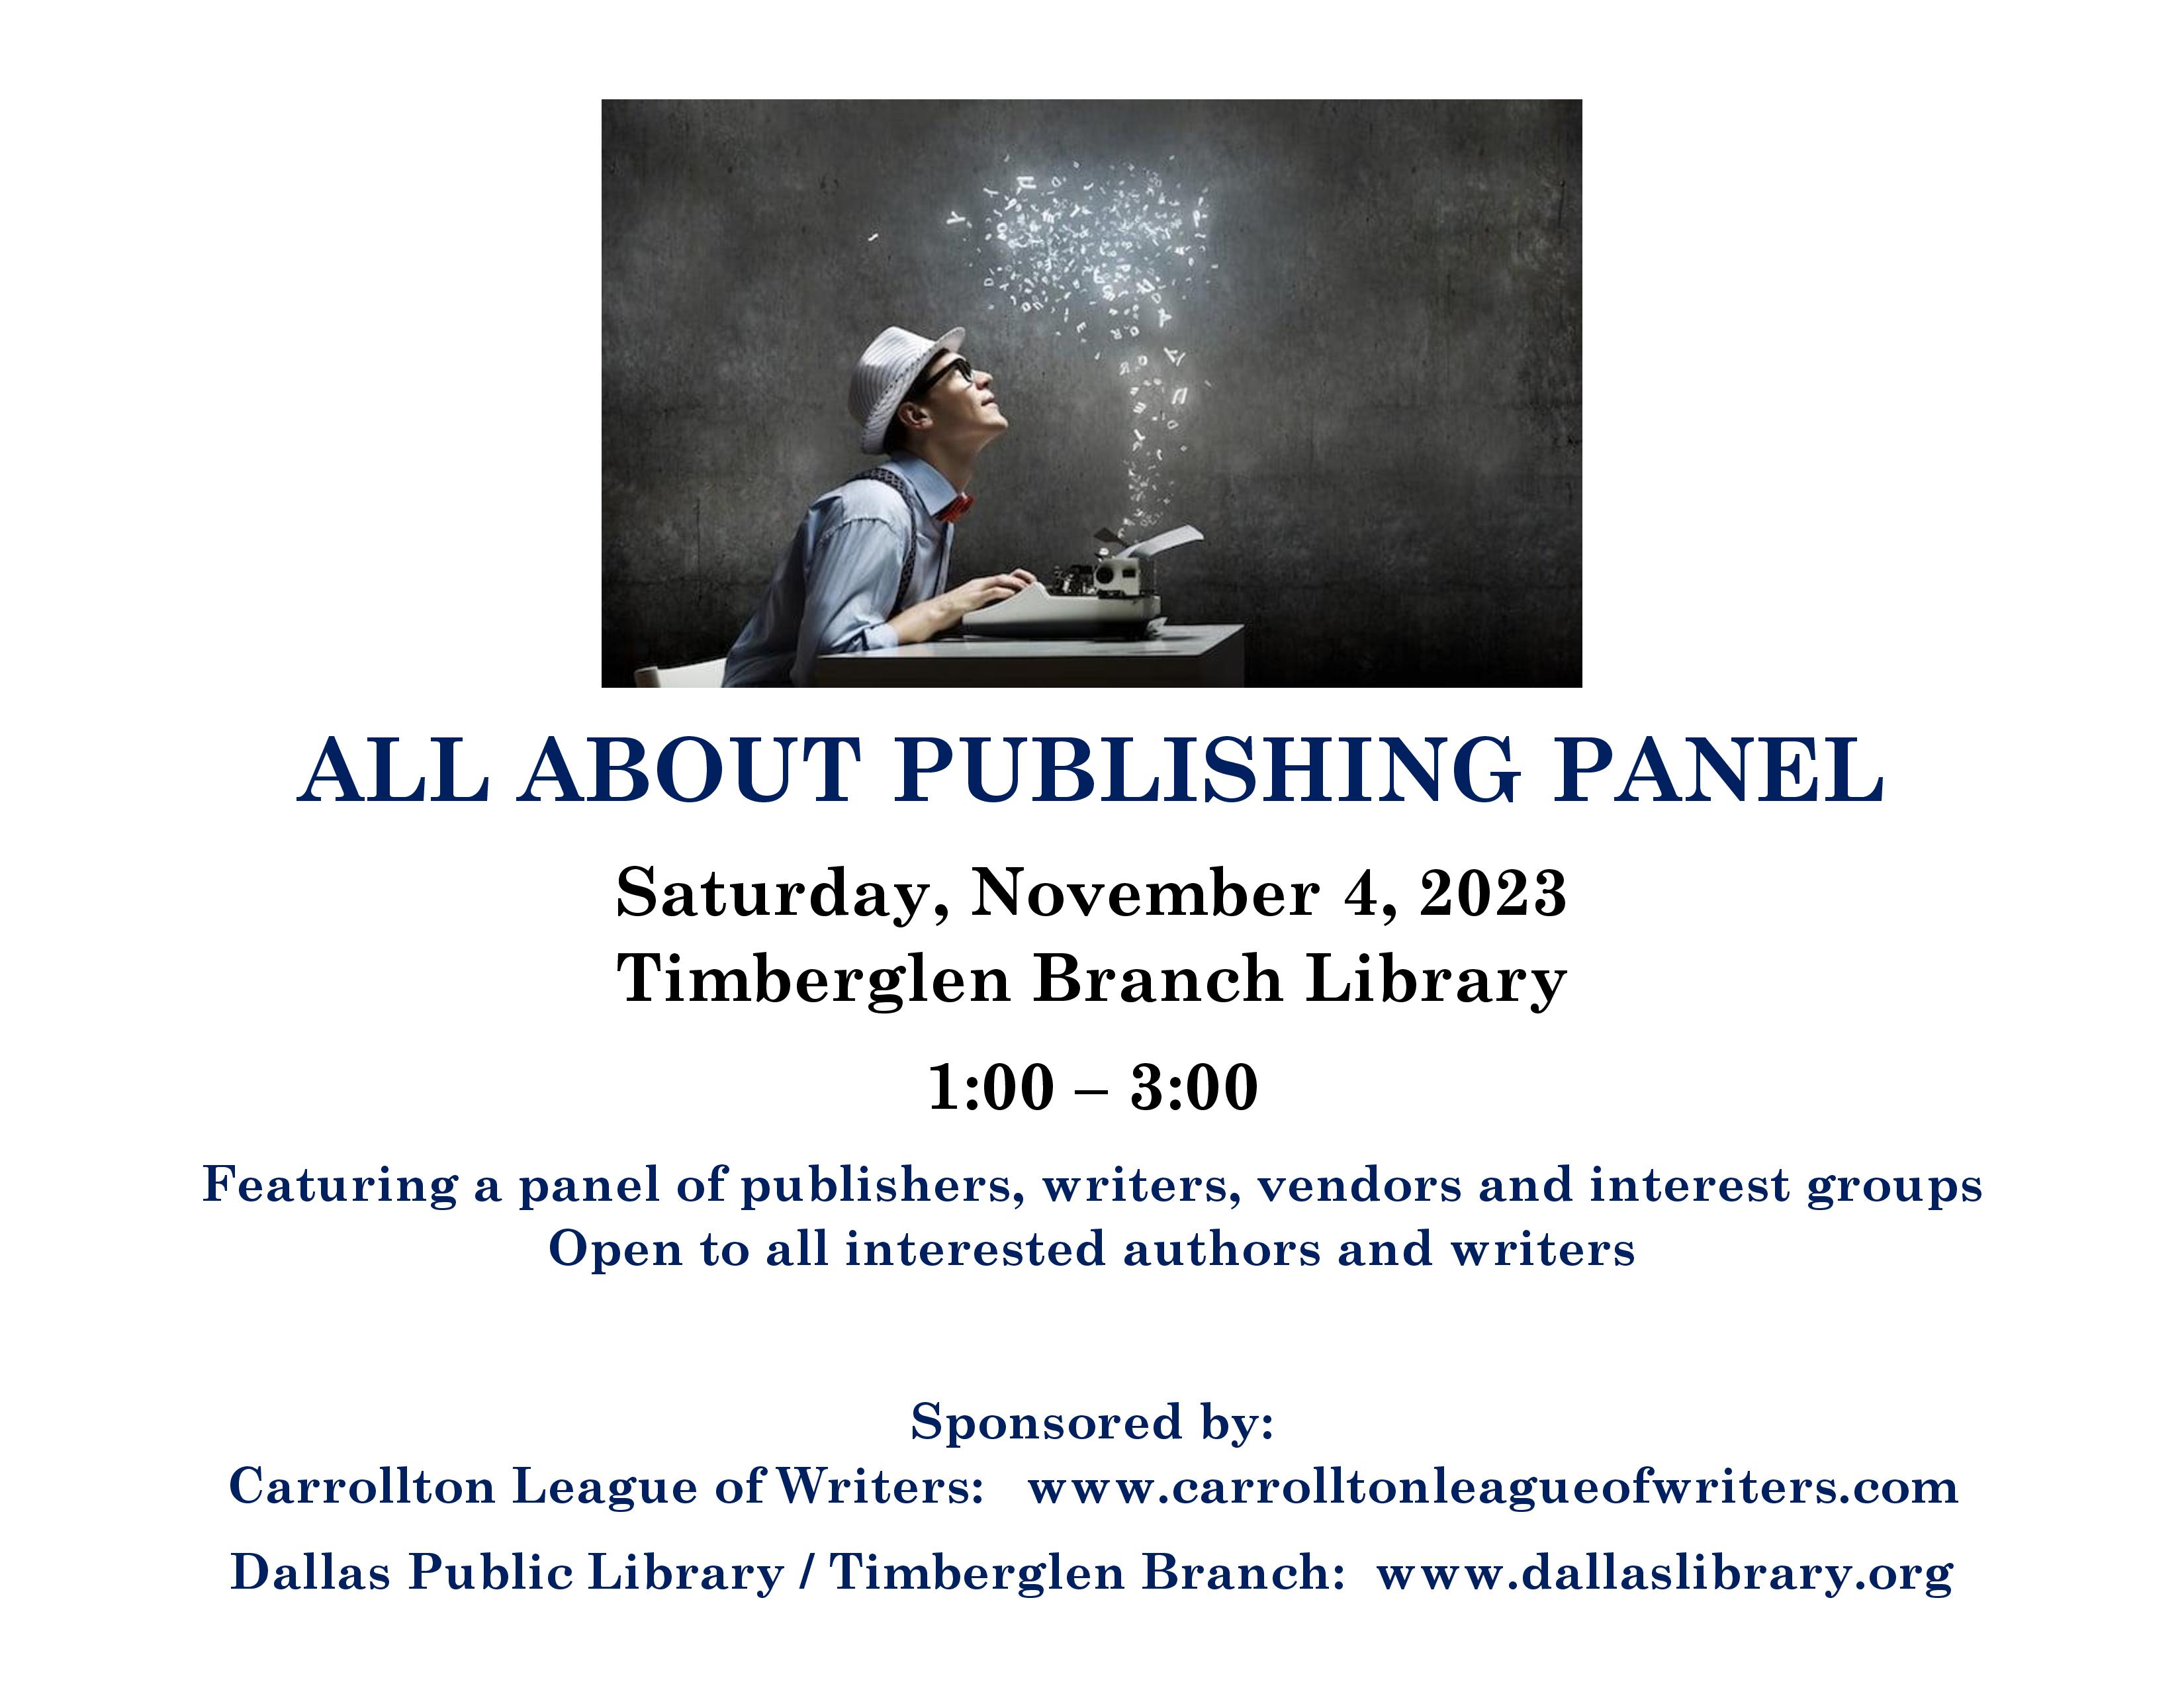 image of publishing panel flyer